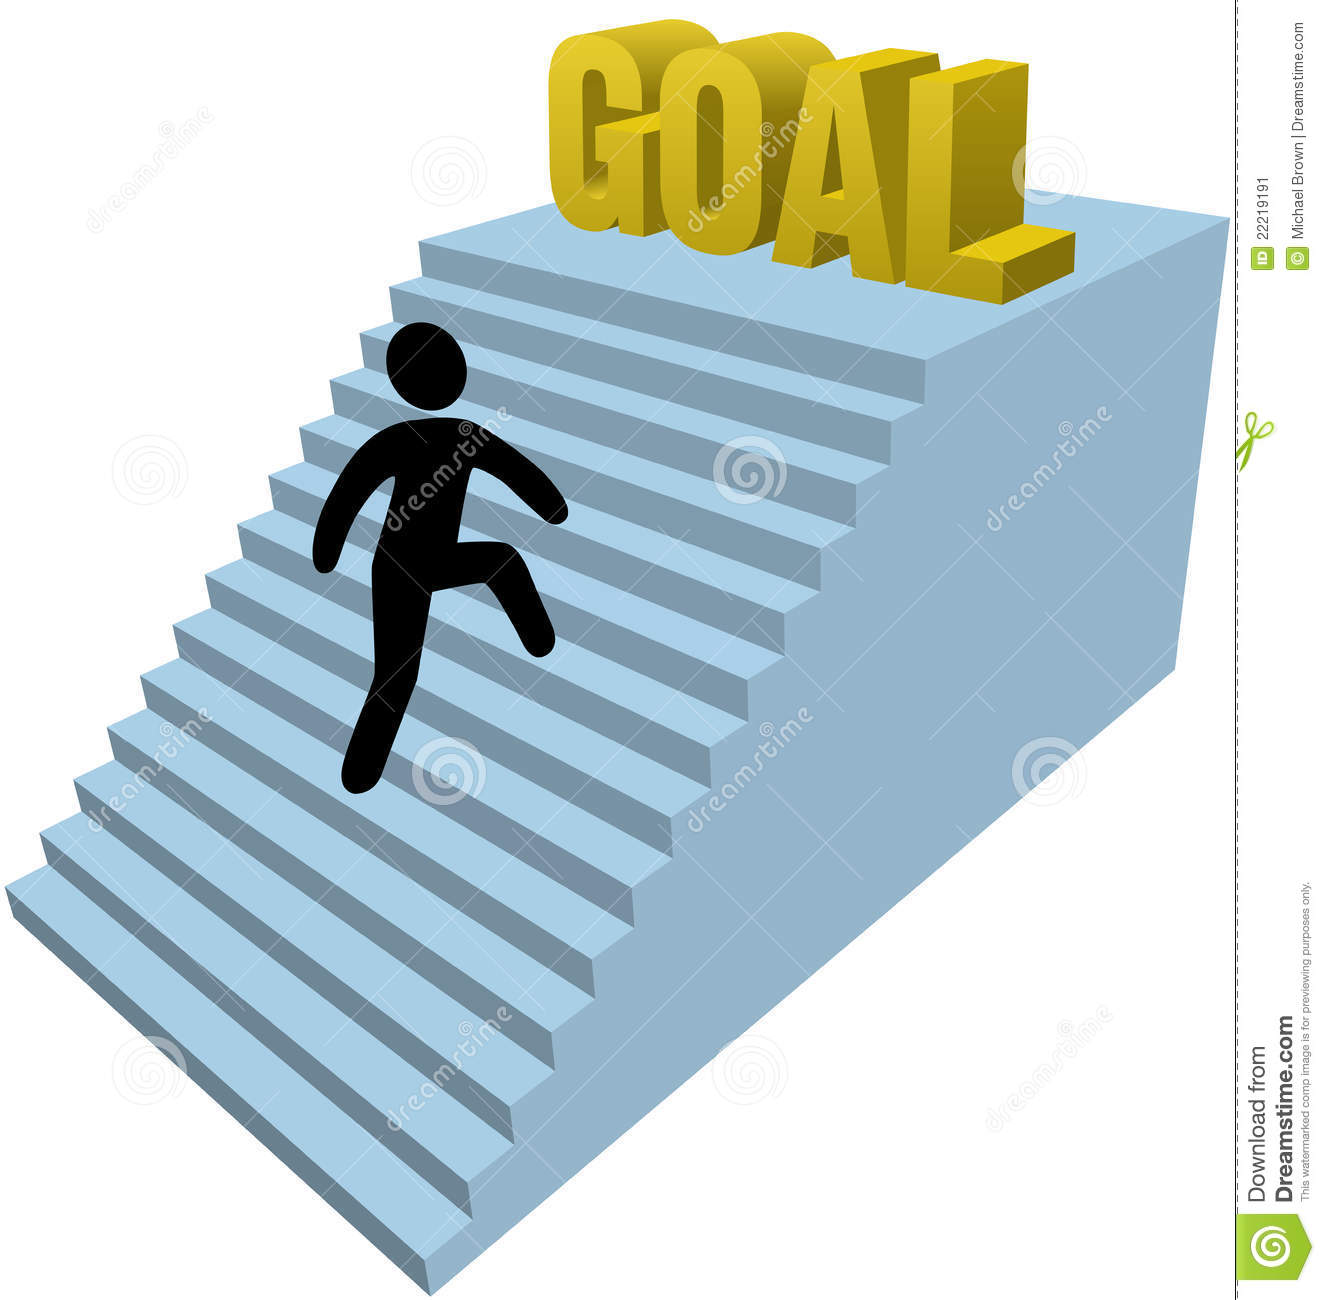 Stick Figure Person Climb Steps Achieve Goal Stock Image   Image